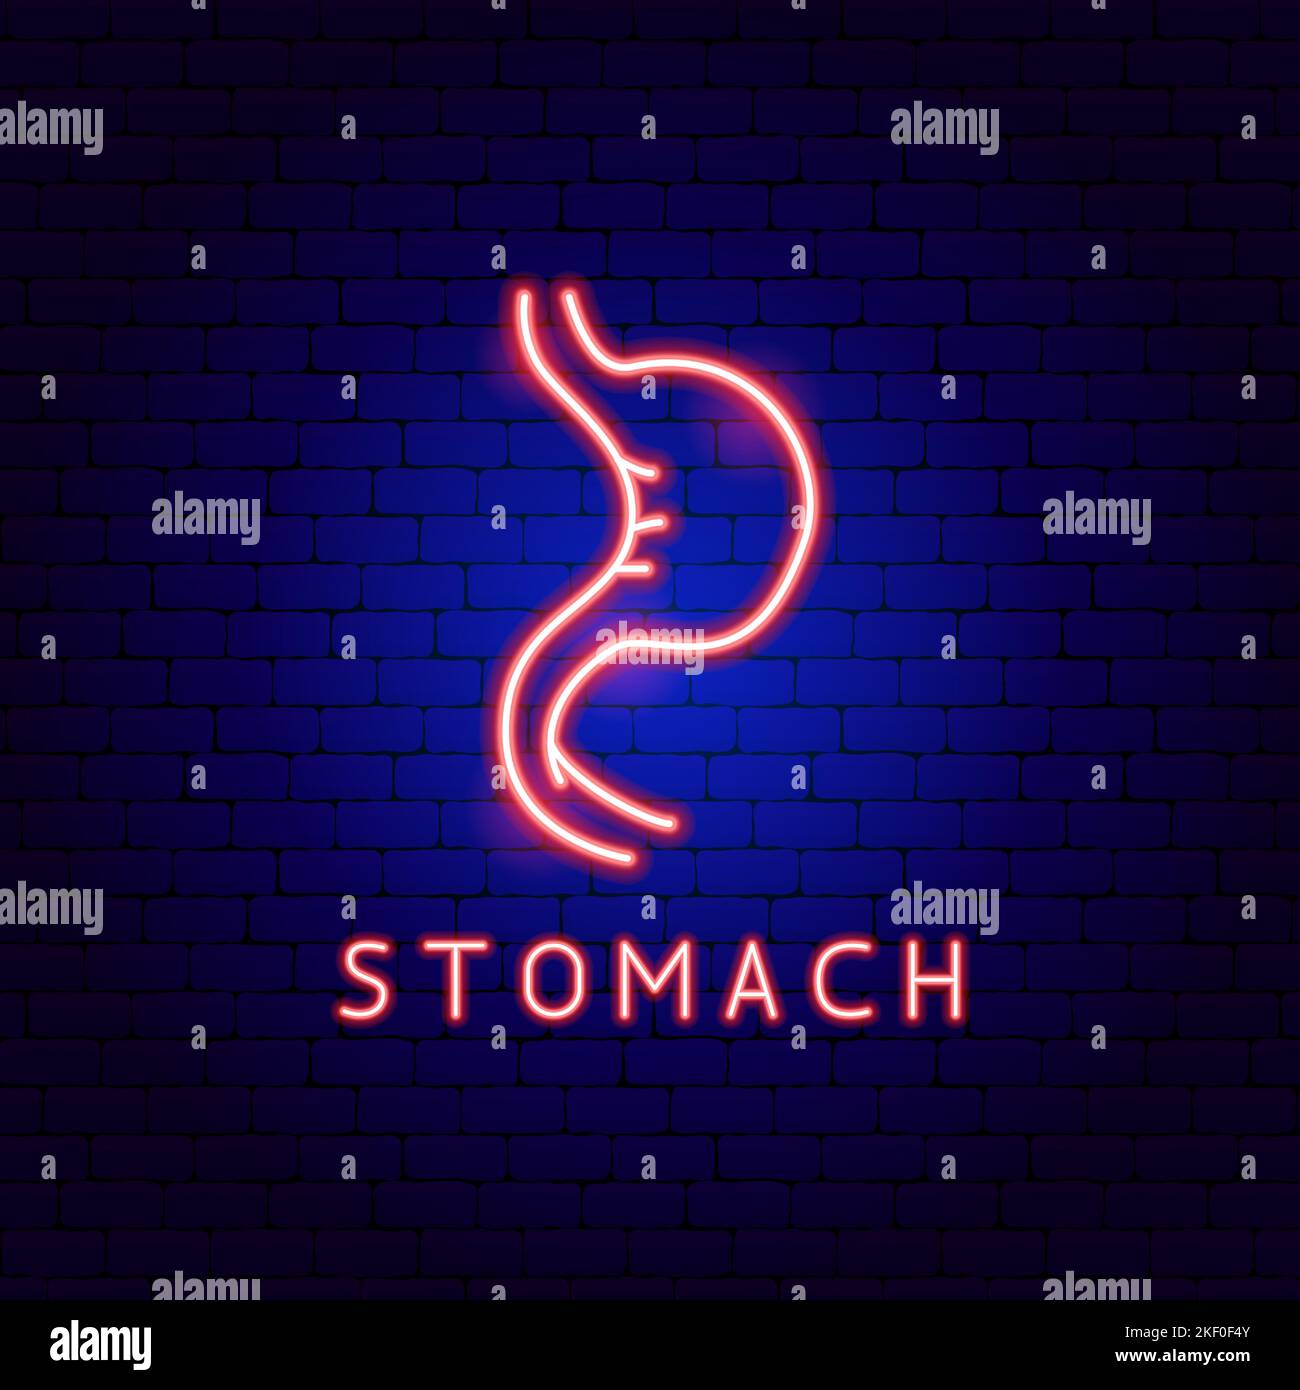 Stomach Neon Label Stock Vector